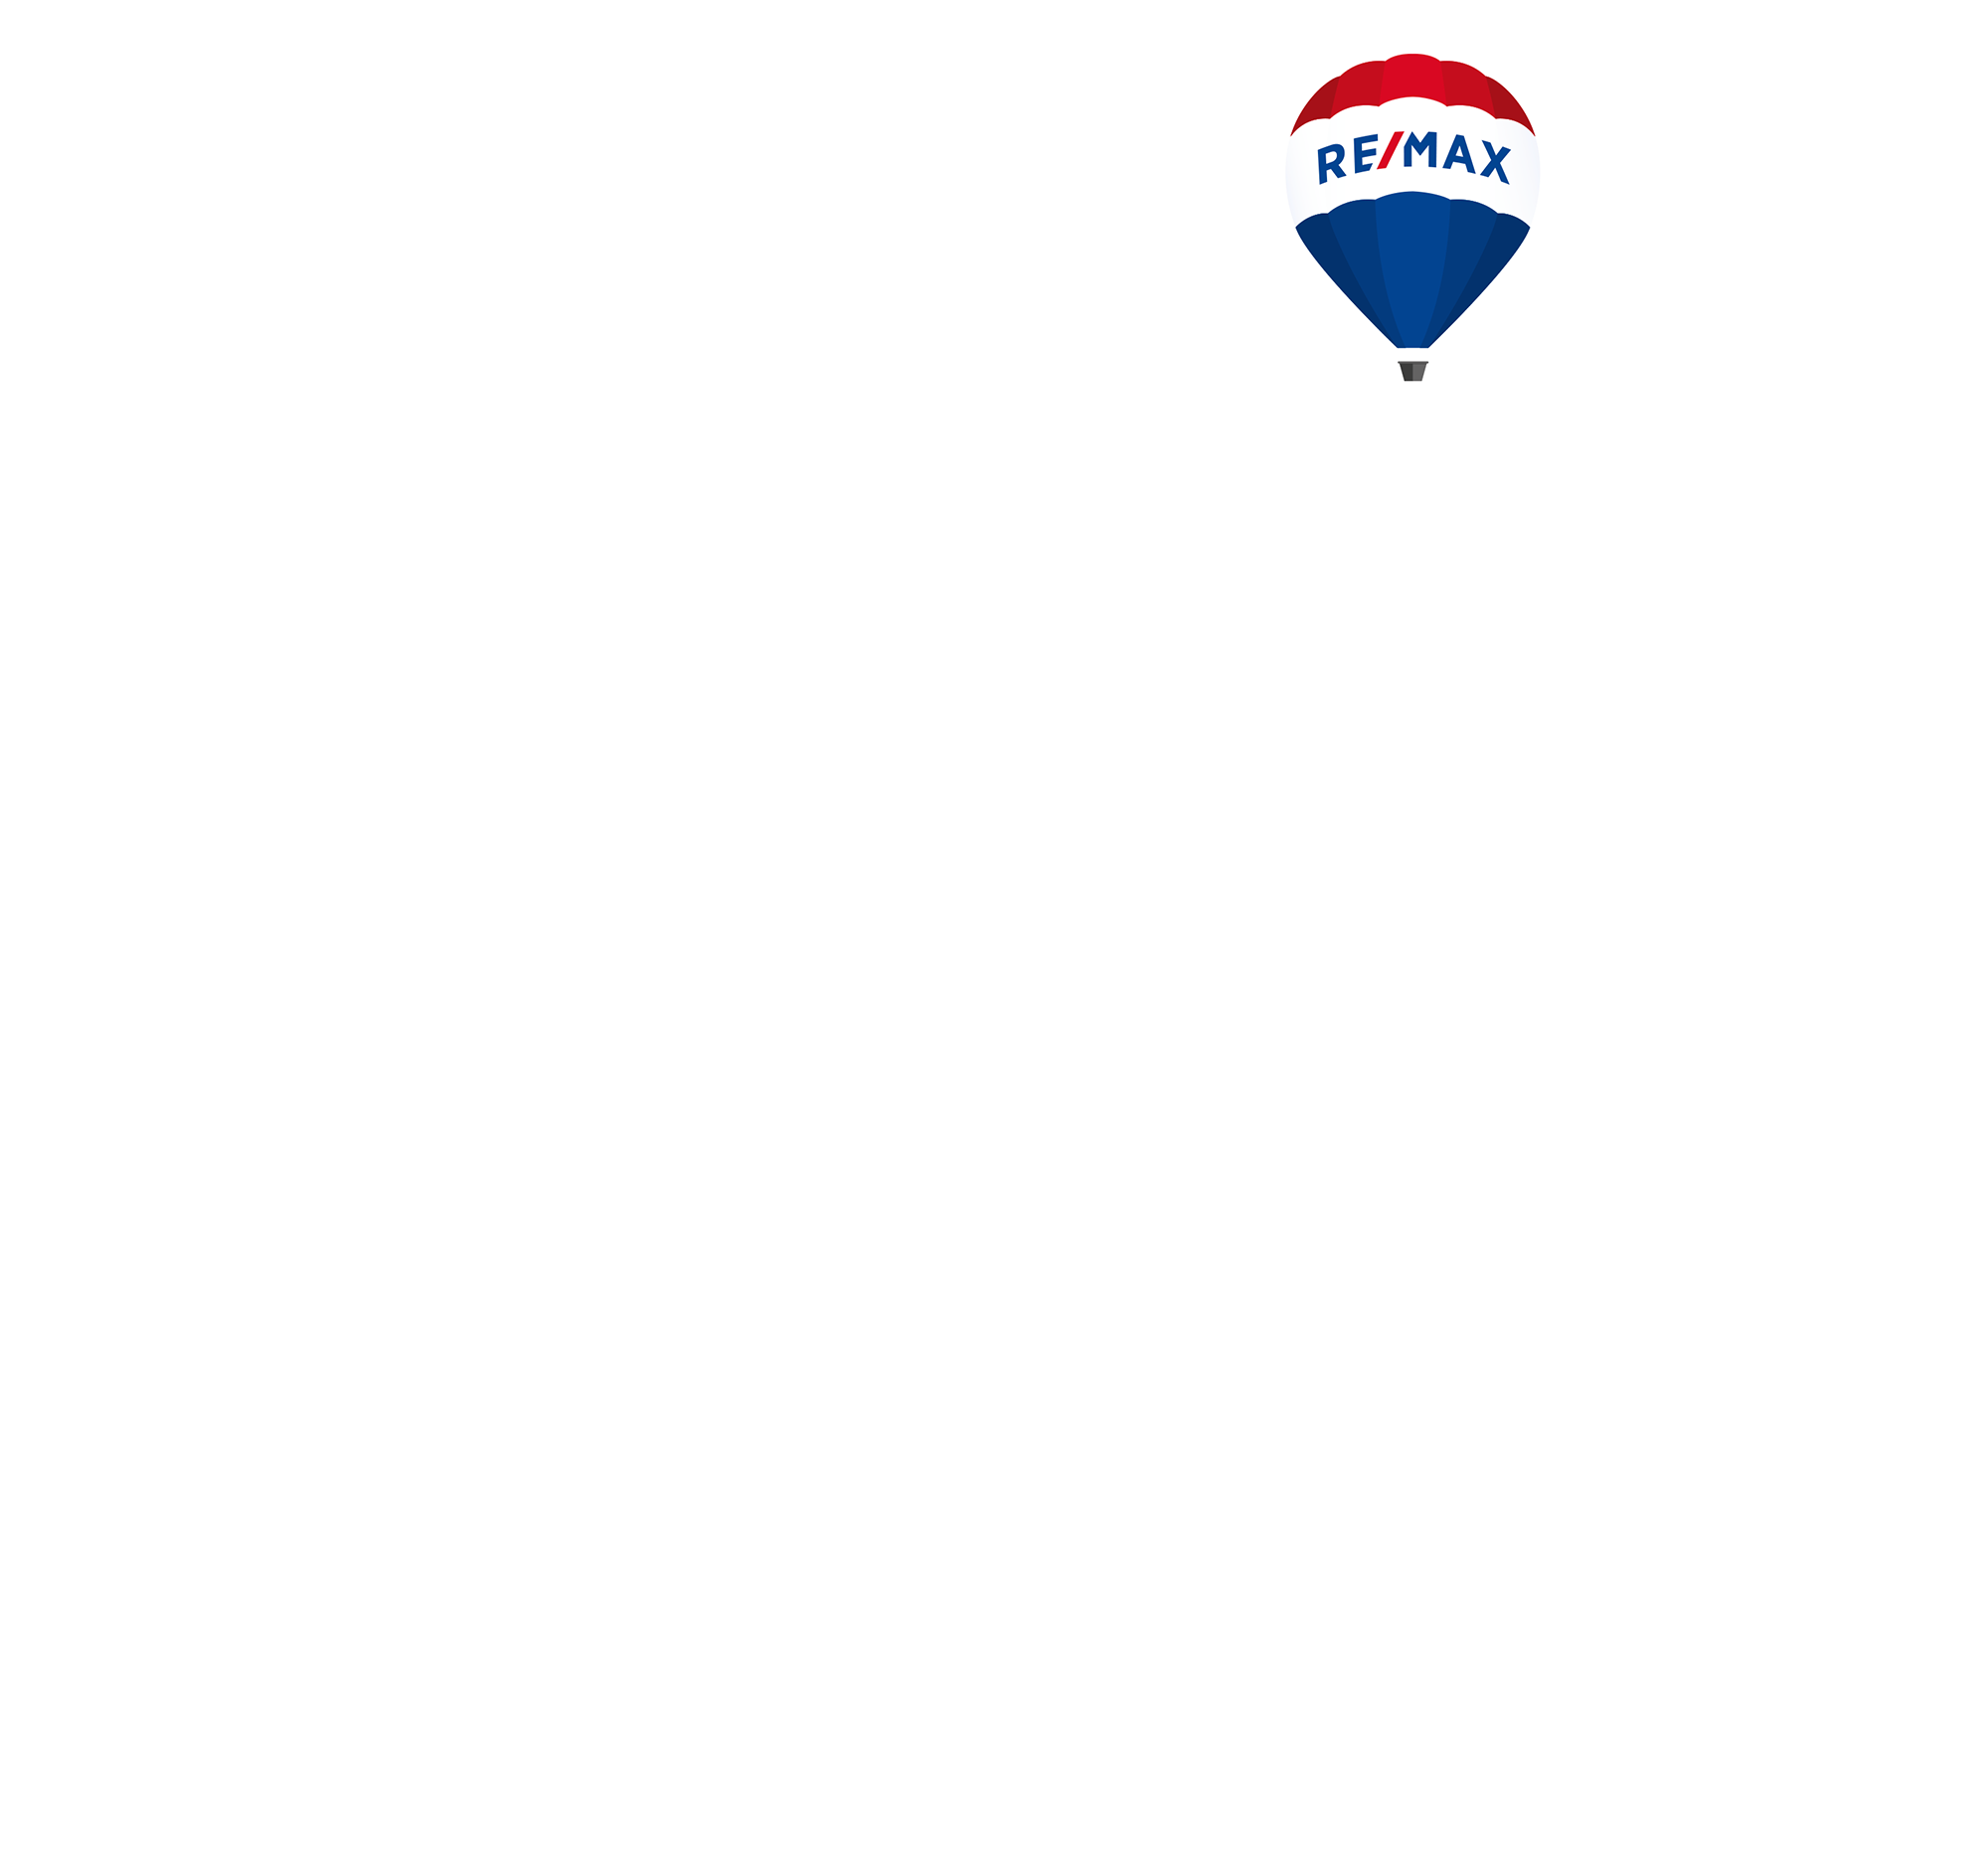 Cathy Sorrant